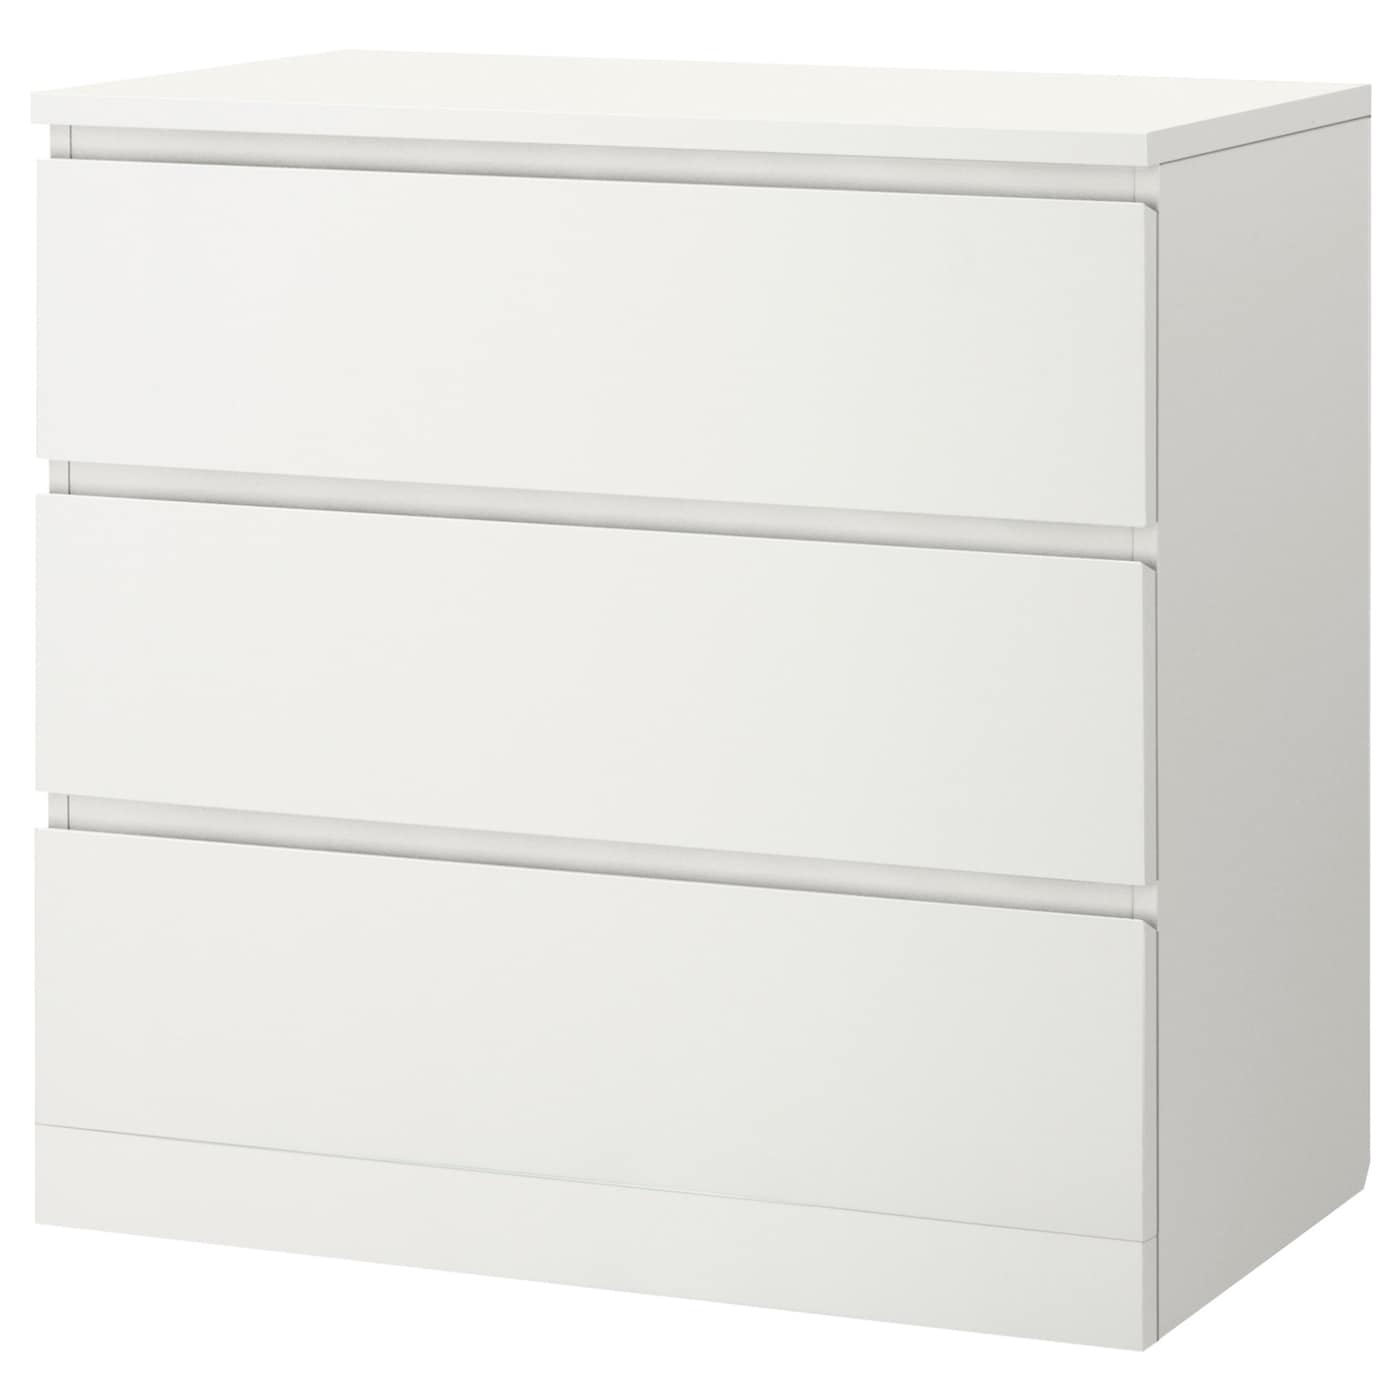 Комод с 3 ящиками - IKEA MALM, 80x78х48 см, белый МАЛЬМ ИКЕА